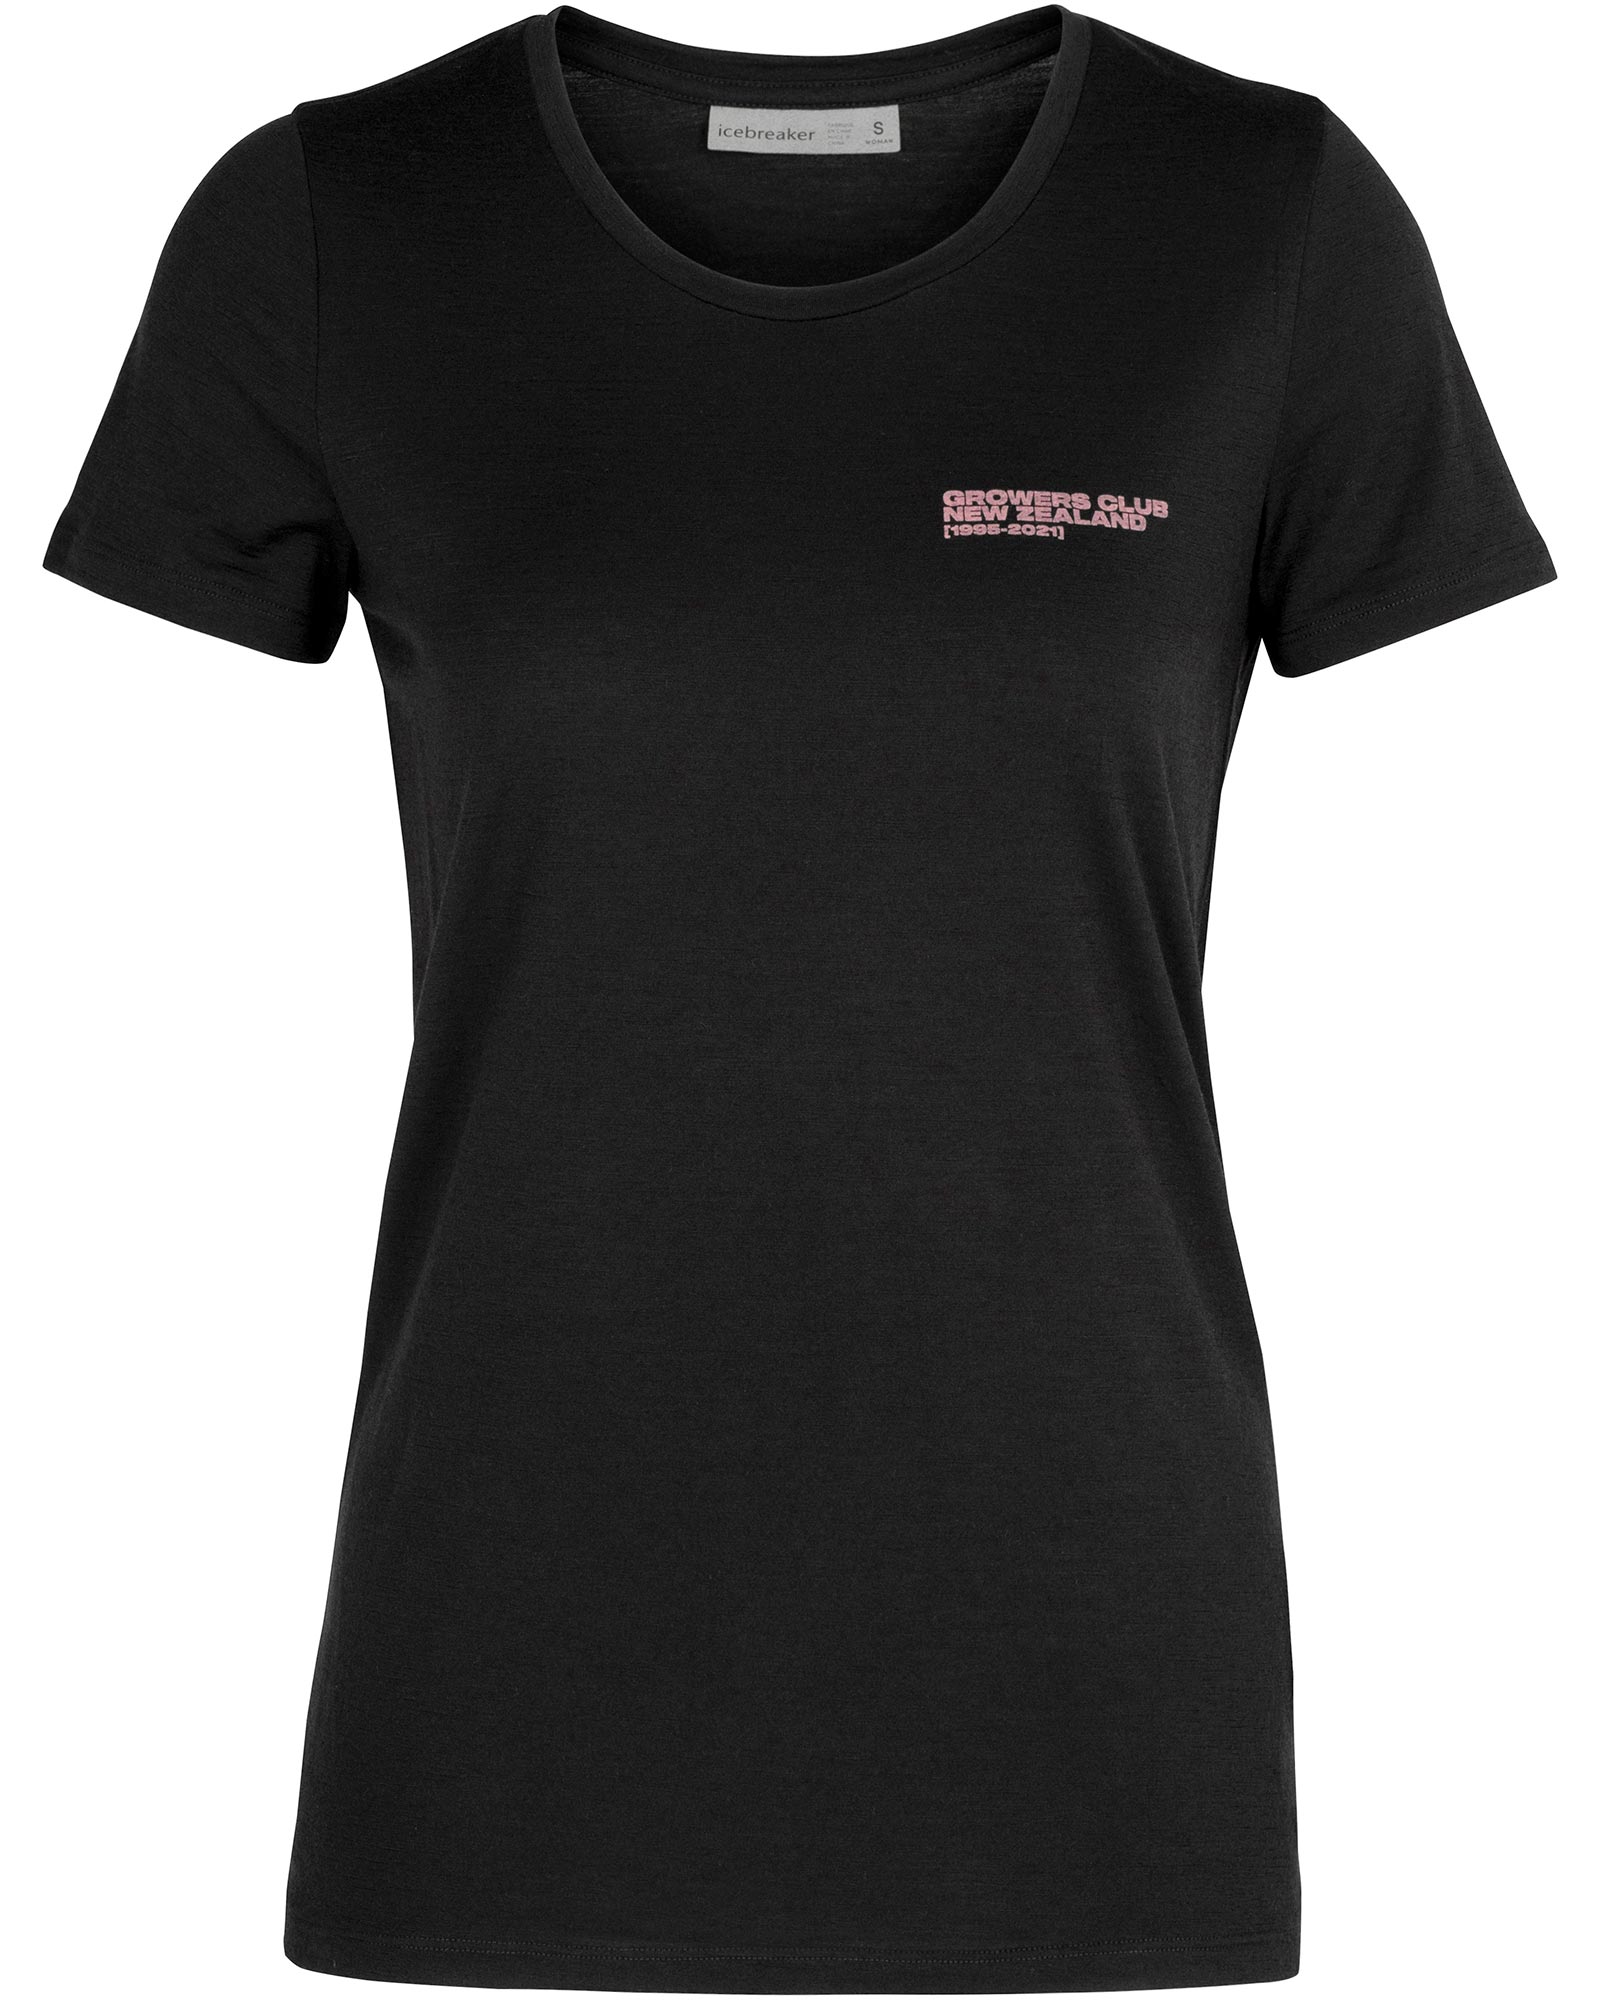 icebreaker Merino Tech Lite Women’s Low Crew T Shirt - Growers Club/Black S